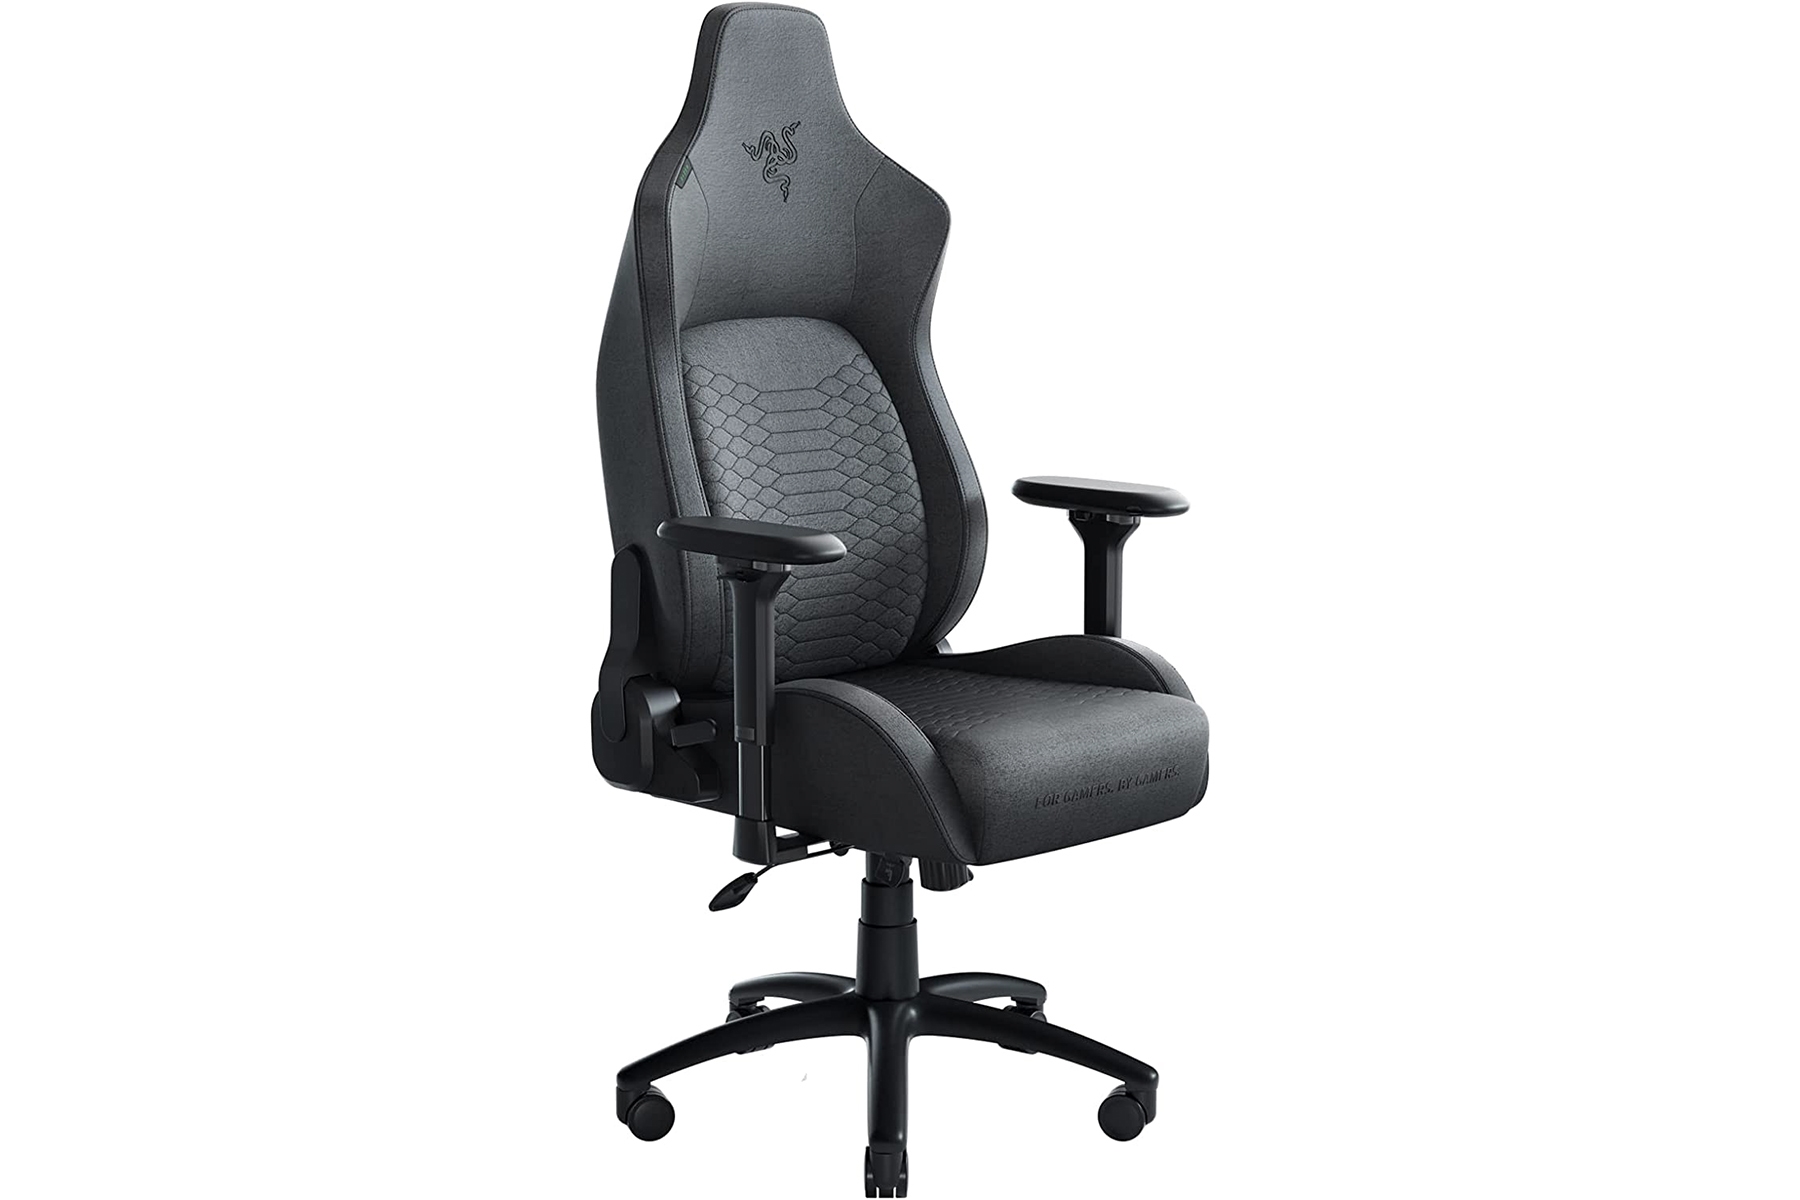 Razer Iskur gaming chair | DeviceDaily.com